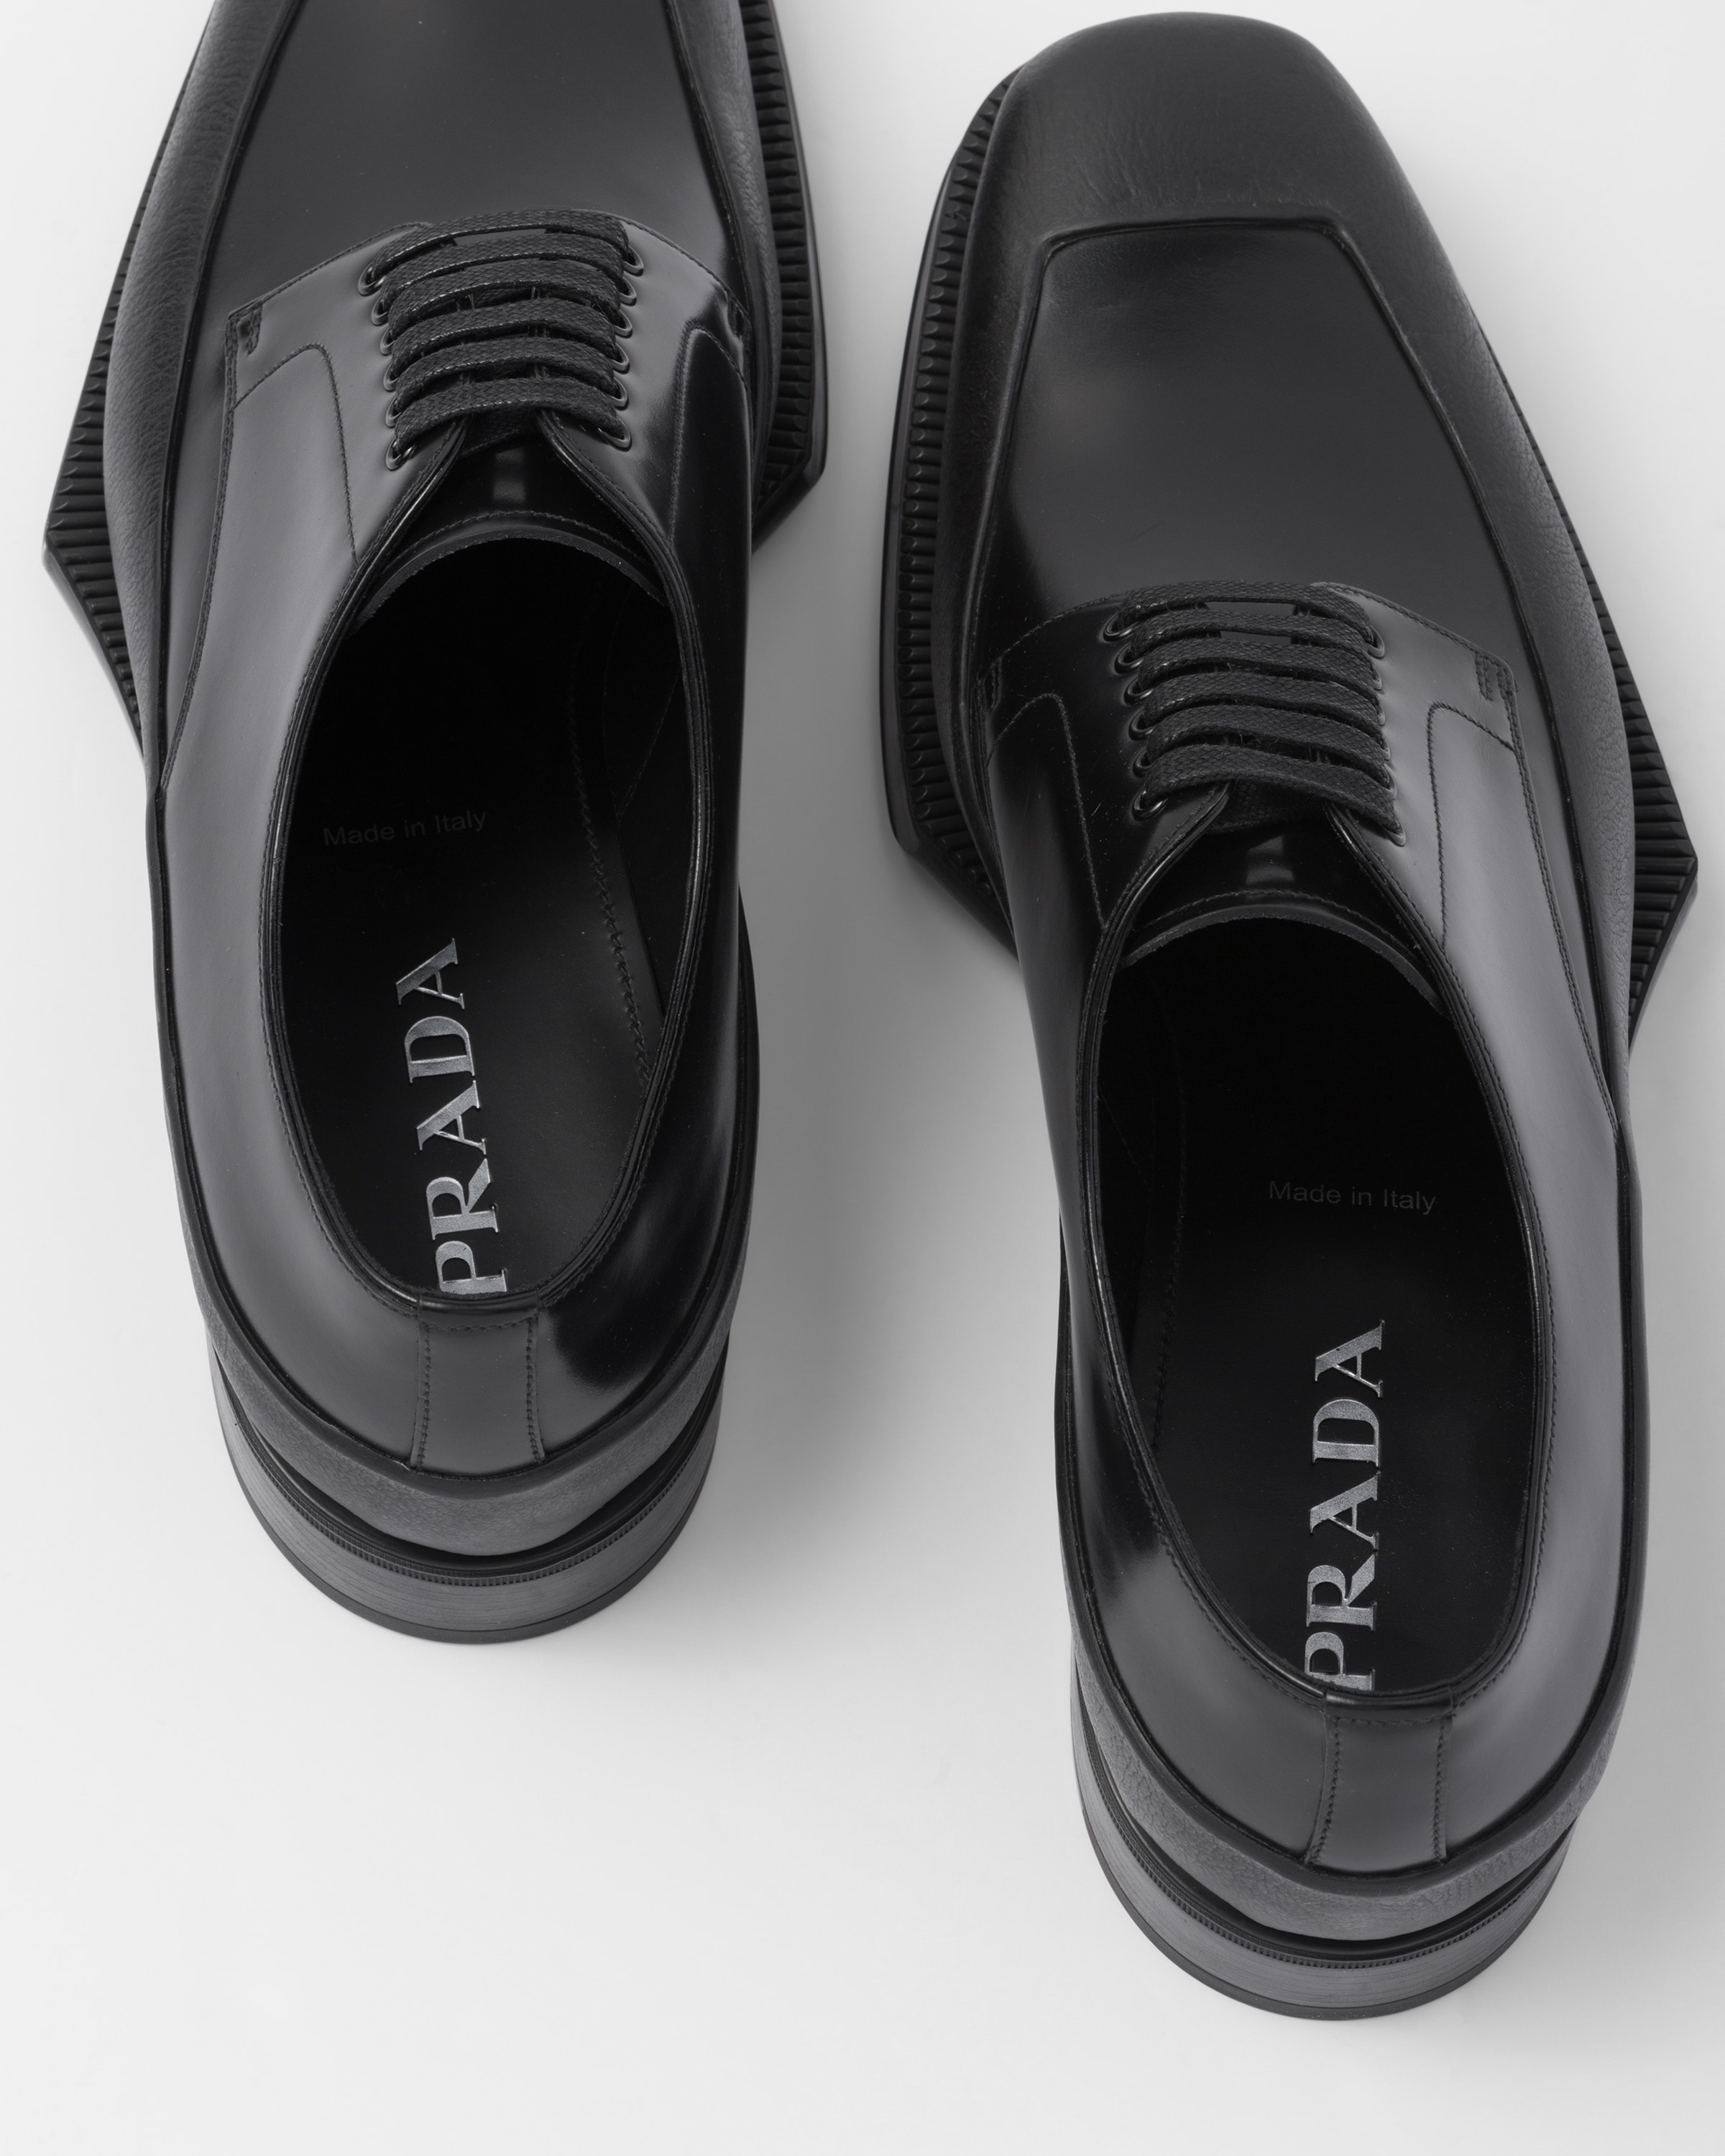 Prada leather Derby shoes - Black